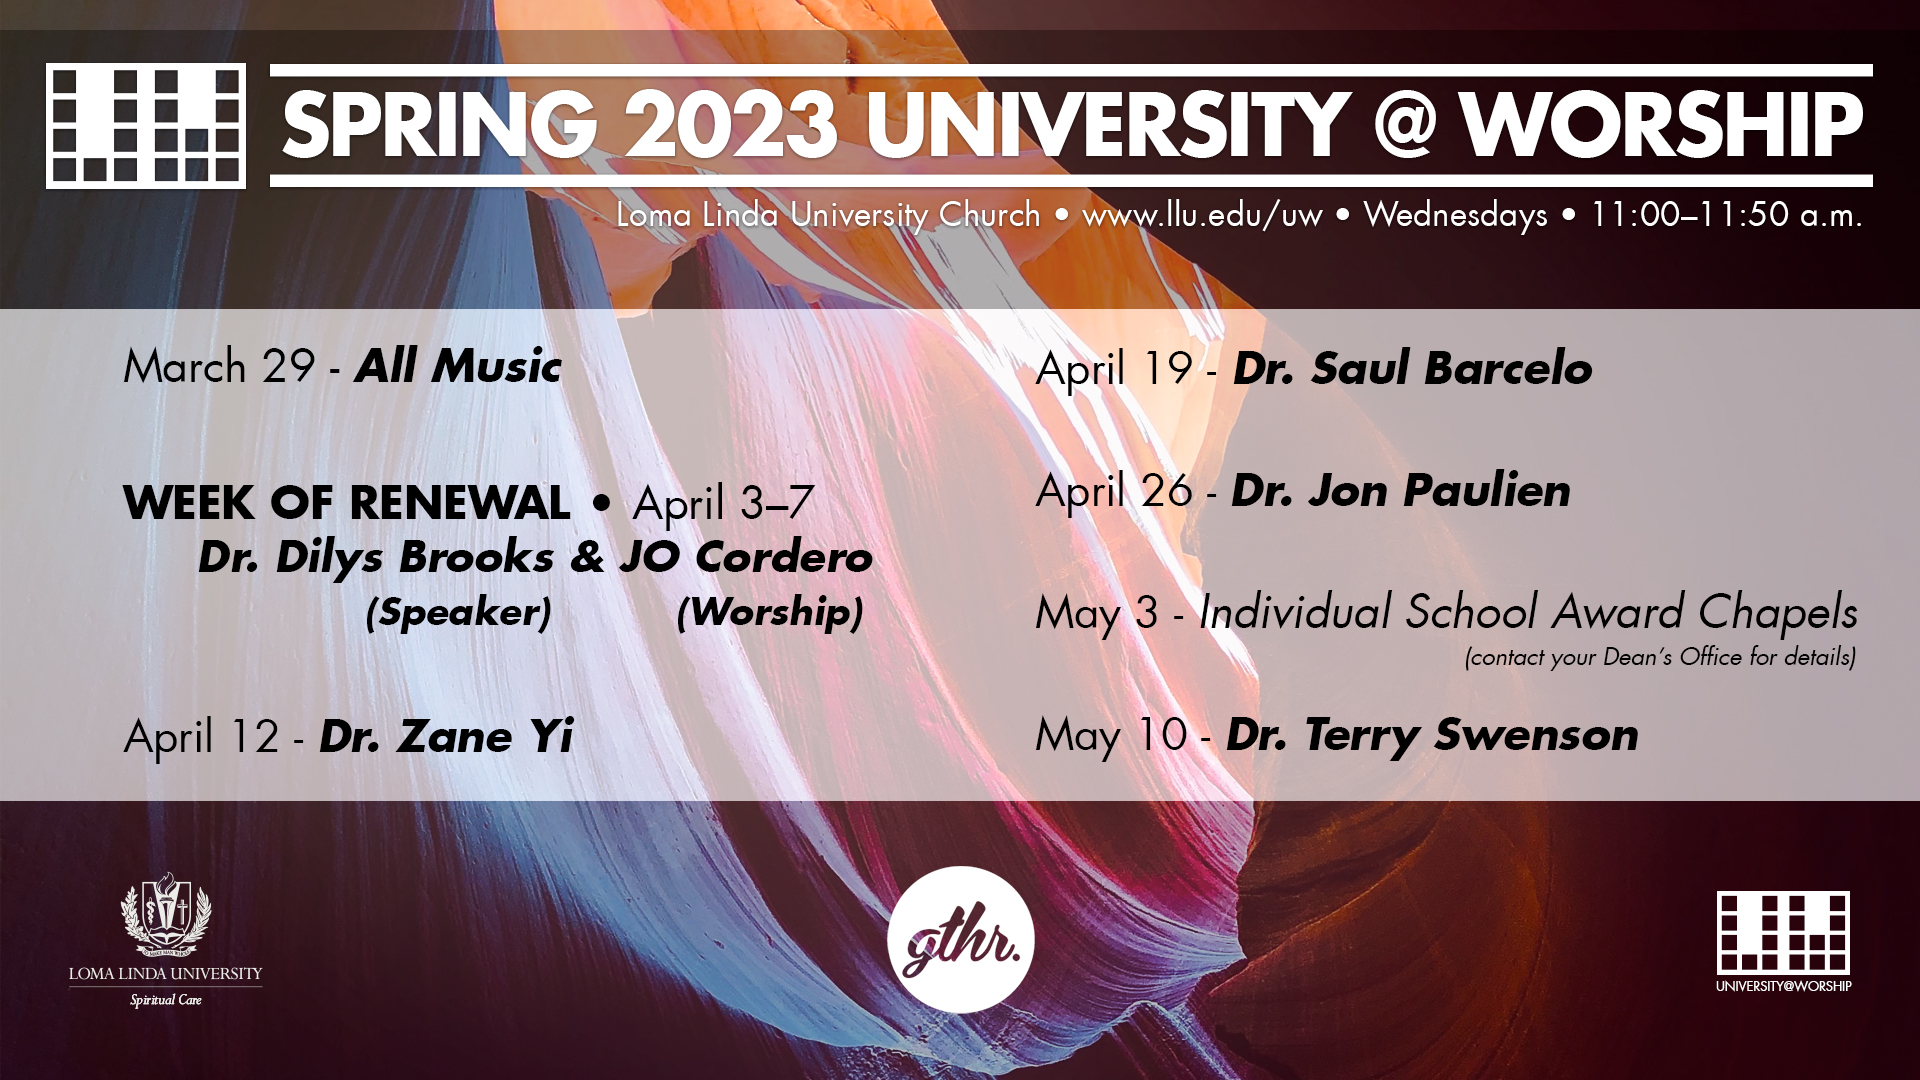 University@Worship 2023 Spring Schedule